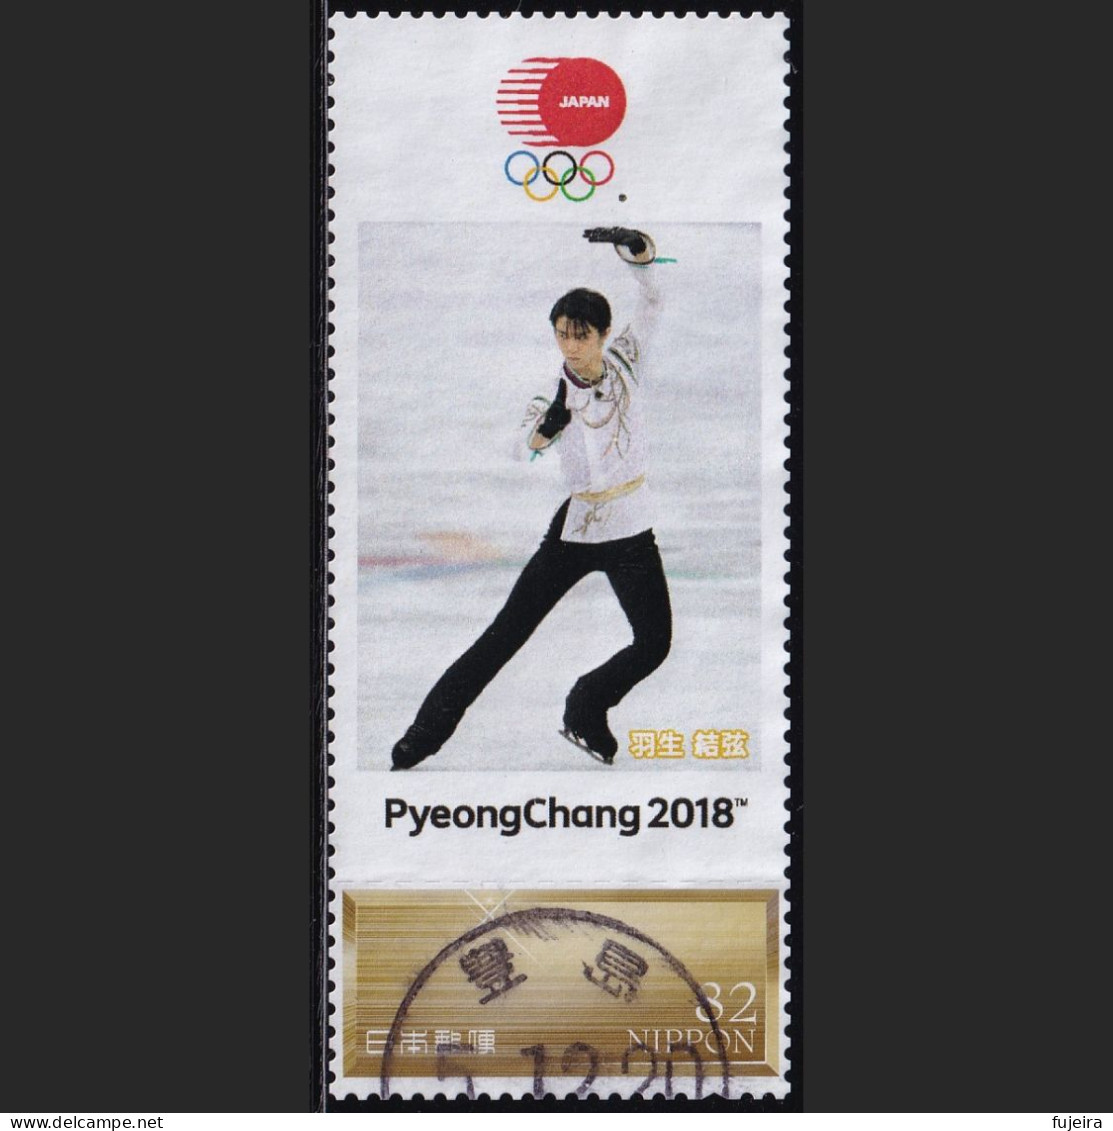 Japan Personalized Stamp, PyeonChang 2018 Olympic Hanyu Yuzuru Figure Skate (jpv9969) Used - Usati